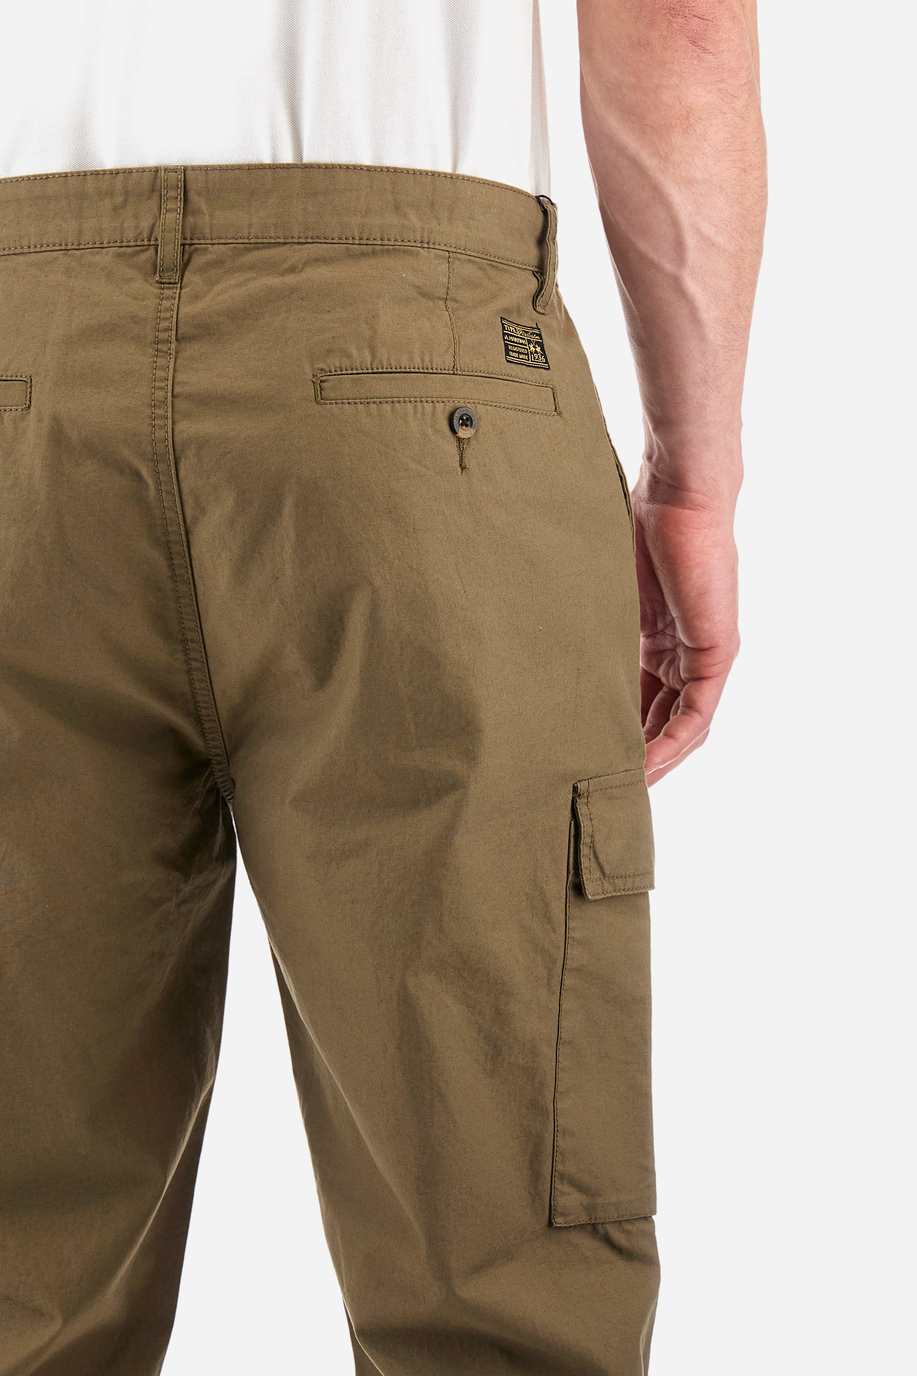 Pantalone cargo regular fit in cotone - Yurik - Pantaloni | La Martina - Official Online Shop